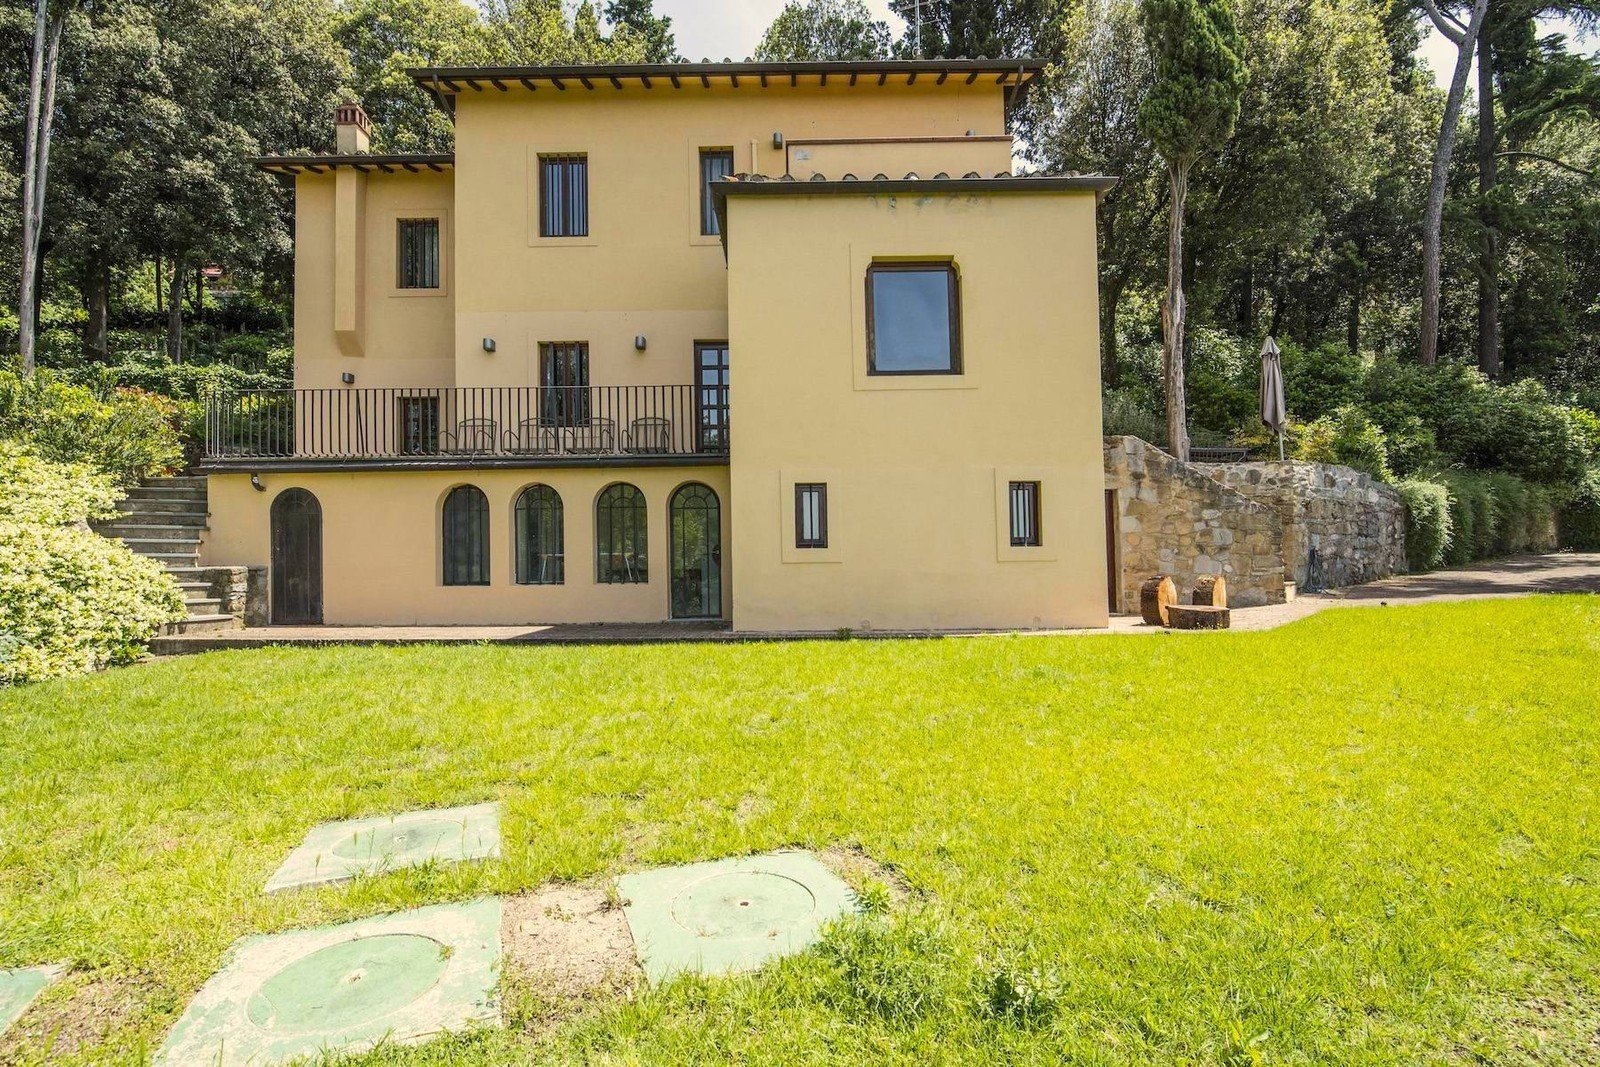 Francis York Italian Villa Set in the Tuscan Hills Overlooking Florence, Italy 00031.jpeg